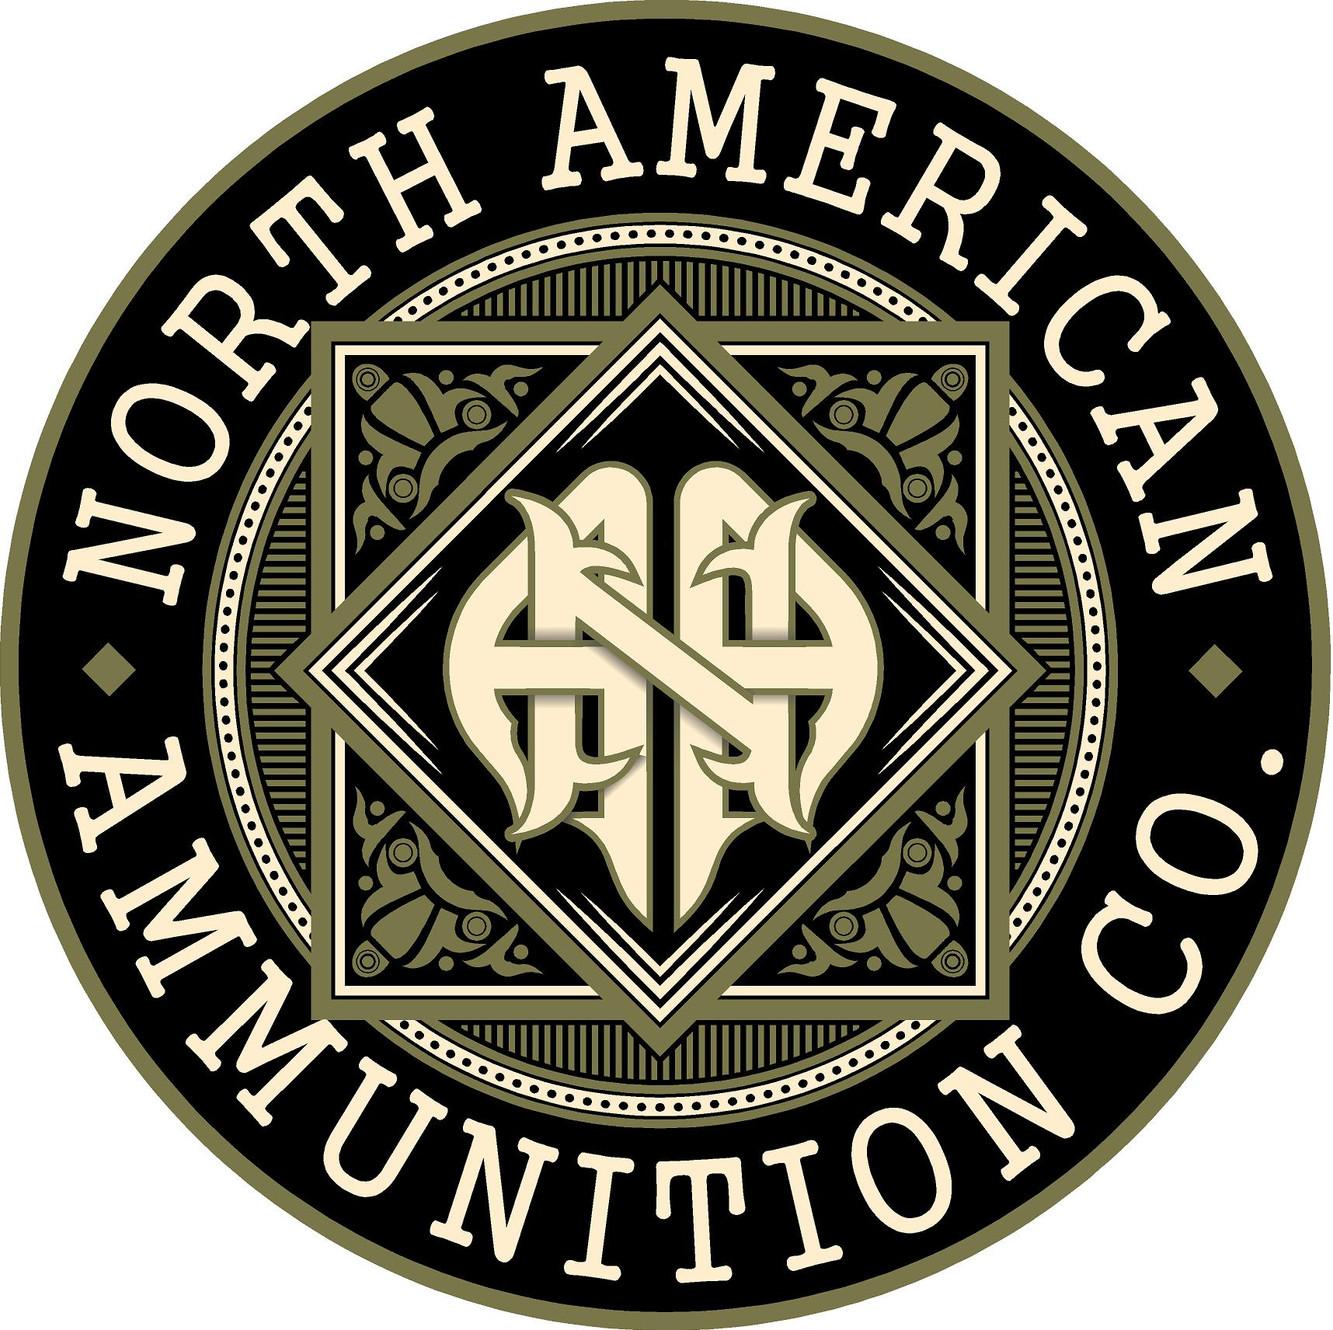 www.northamericanammunition.com